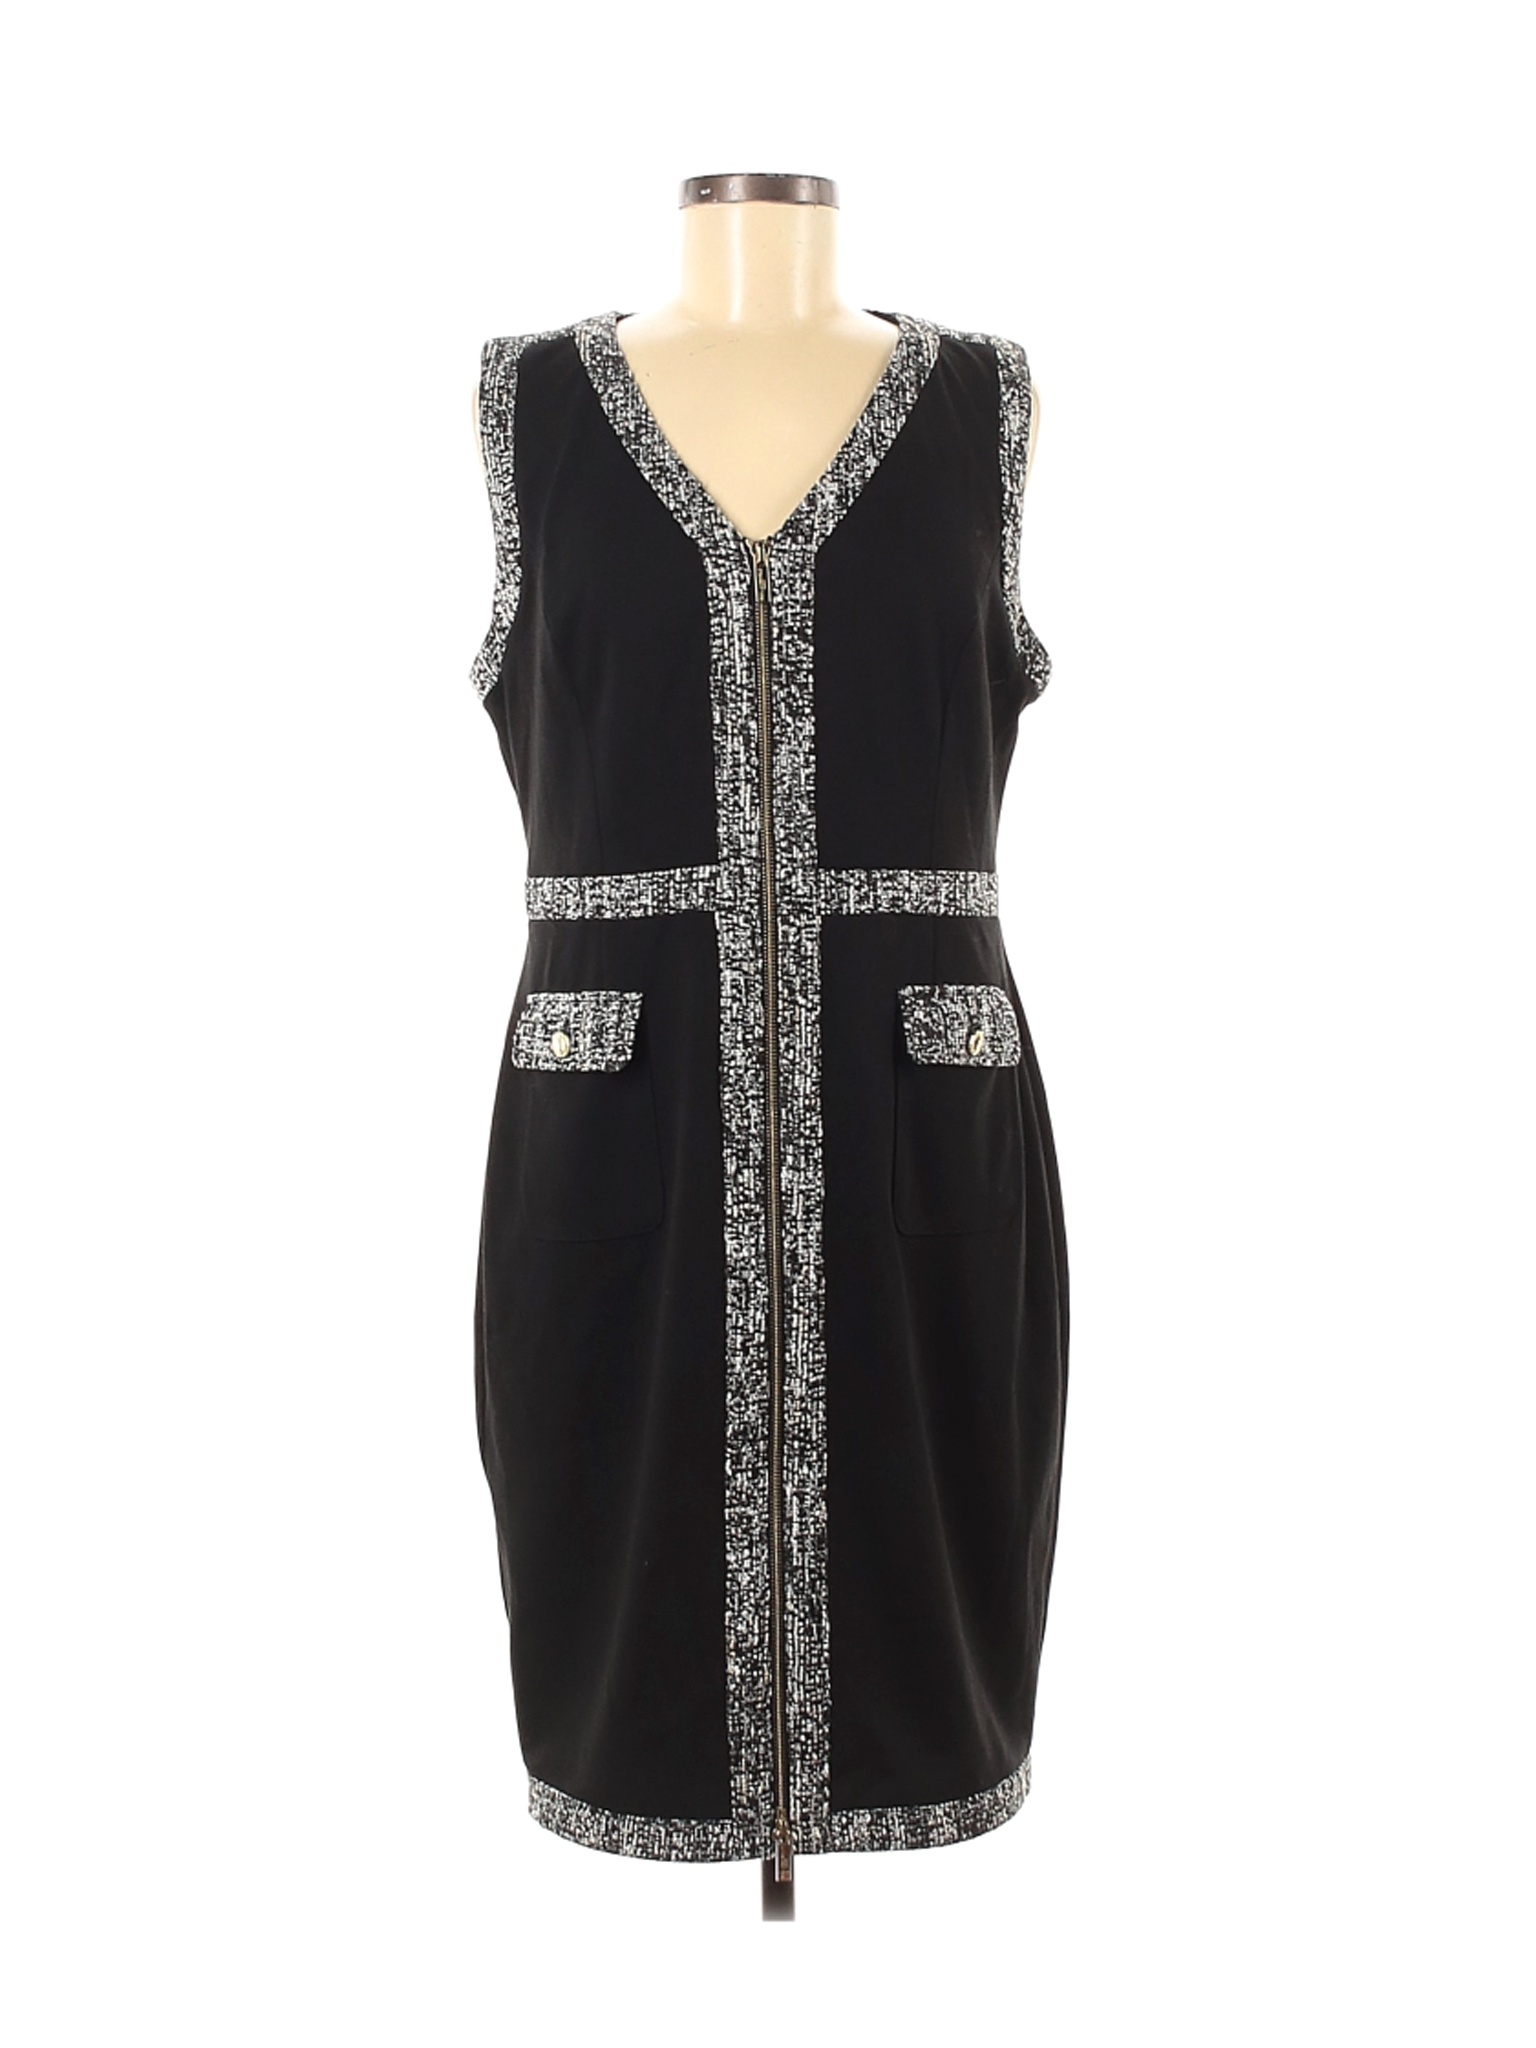 NWT Karl Lagerfeld Women Black Cocktail Dress 12 | eBay